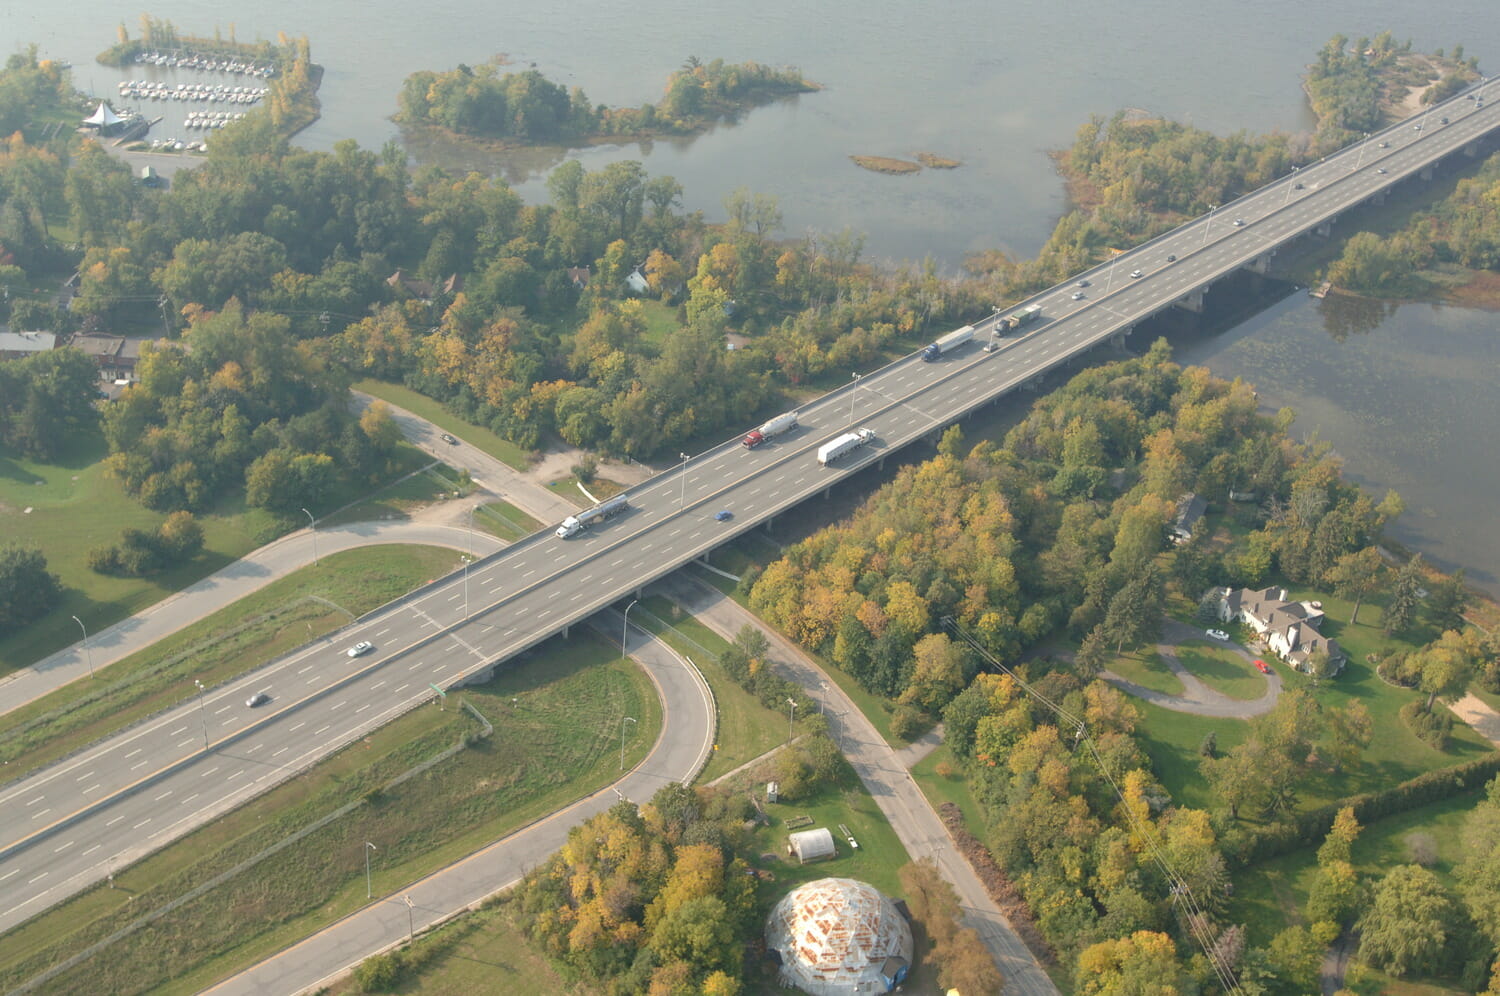 An aerial view of a bridge over a lake.